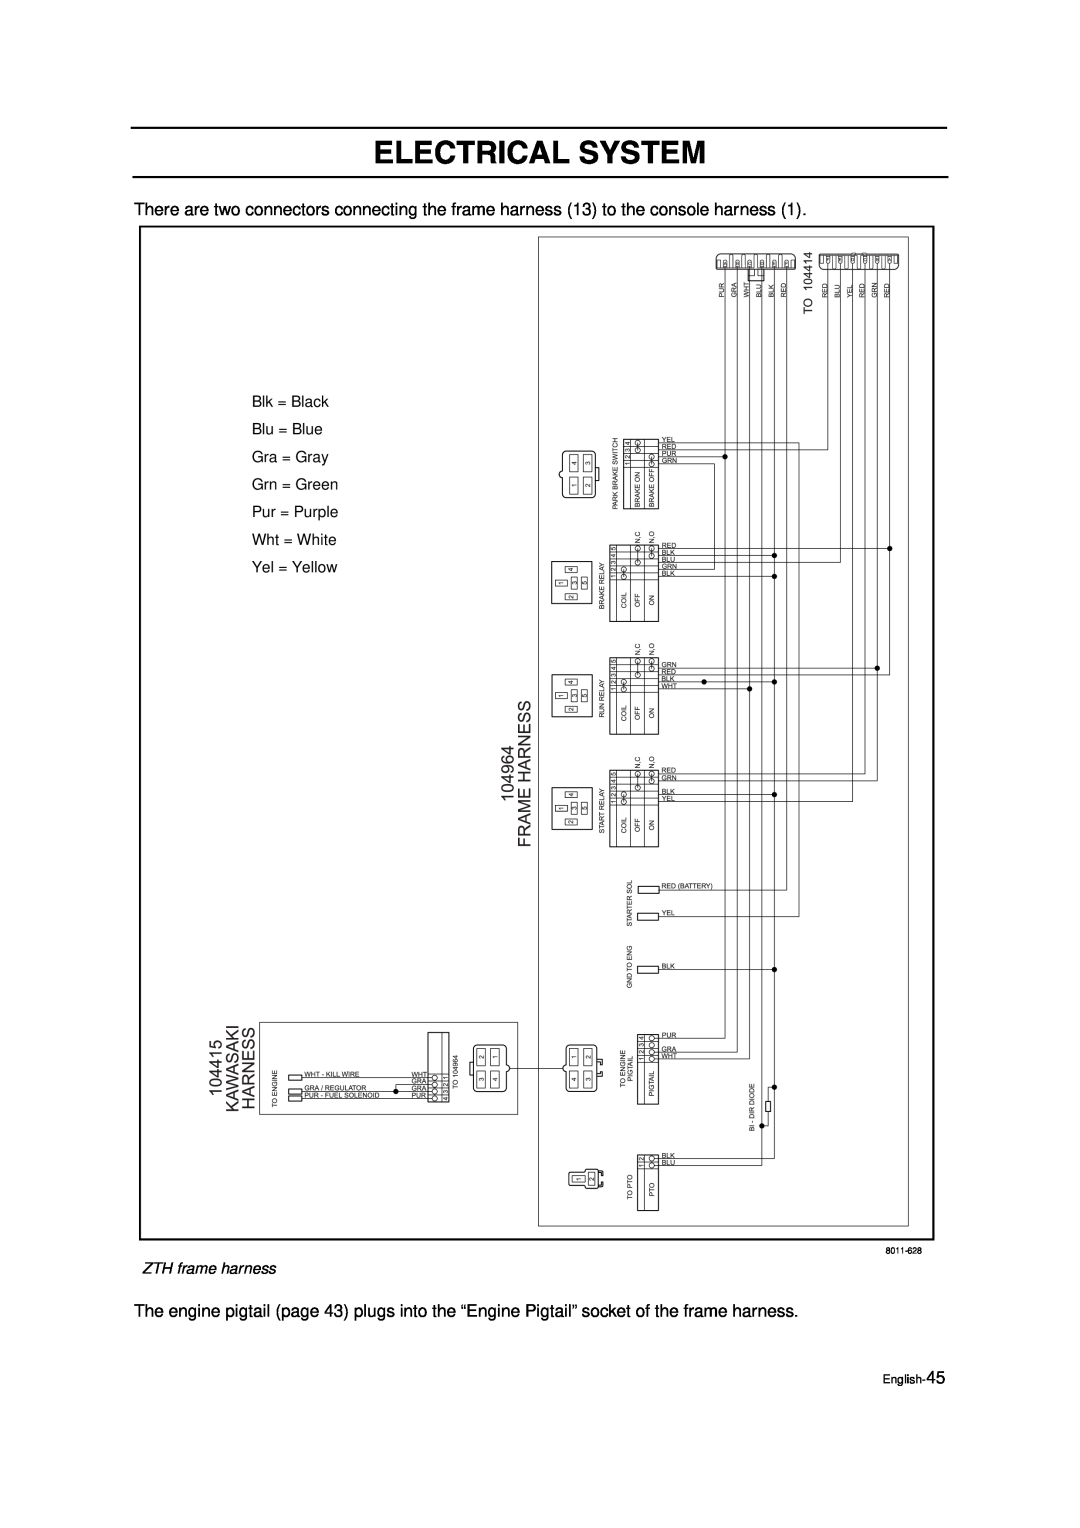 Husqvarna ZTH5223, ZTH6125 manual Electrical System, ZTH frame harness, English-45 